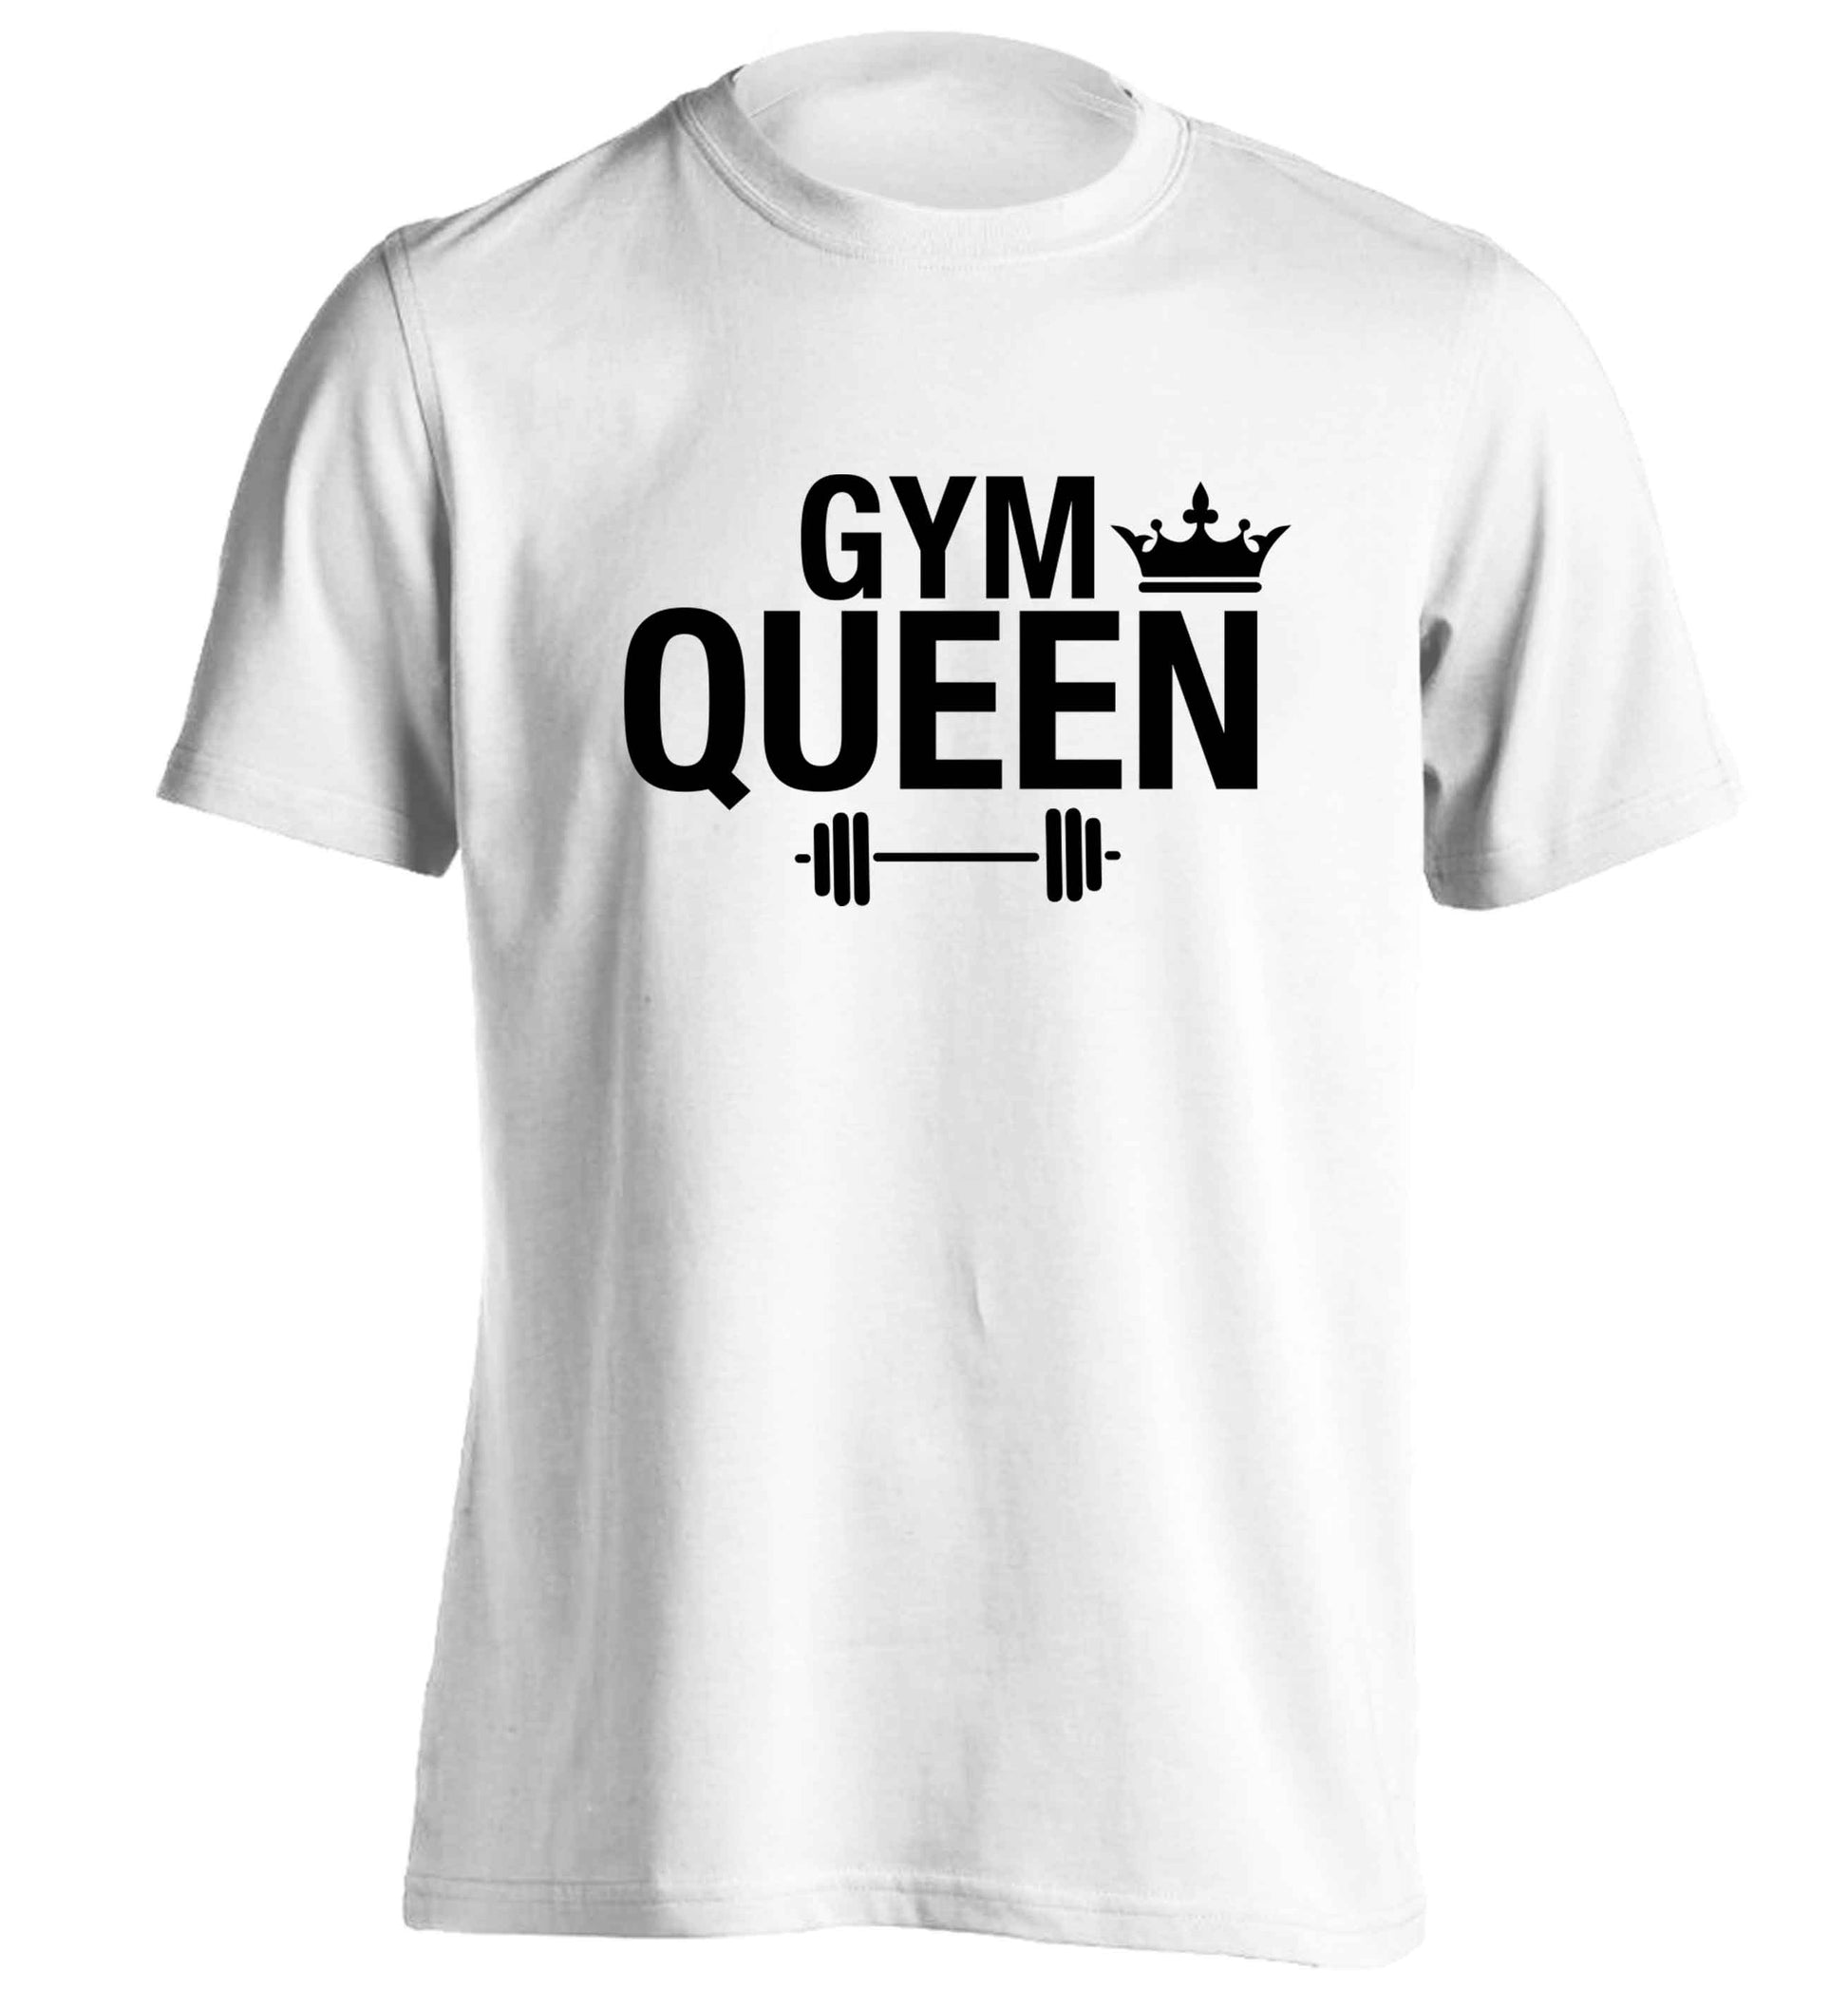 Gym queen adults unisex white Tshirt 2XL